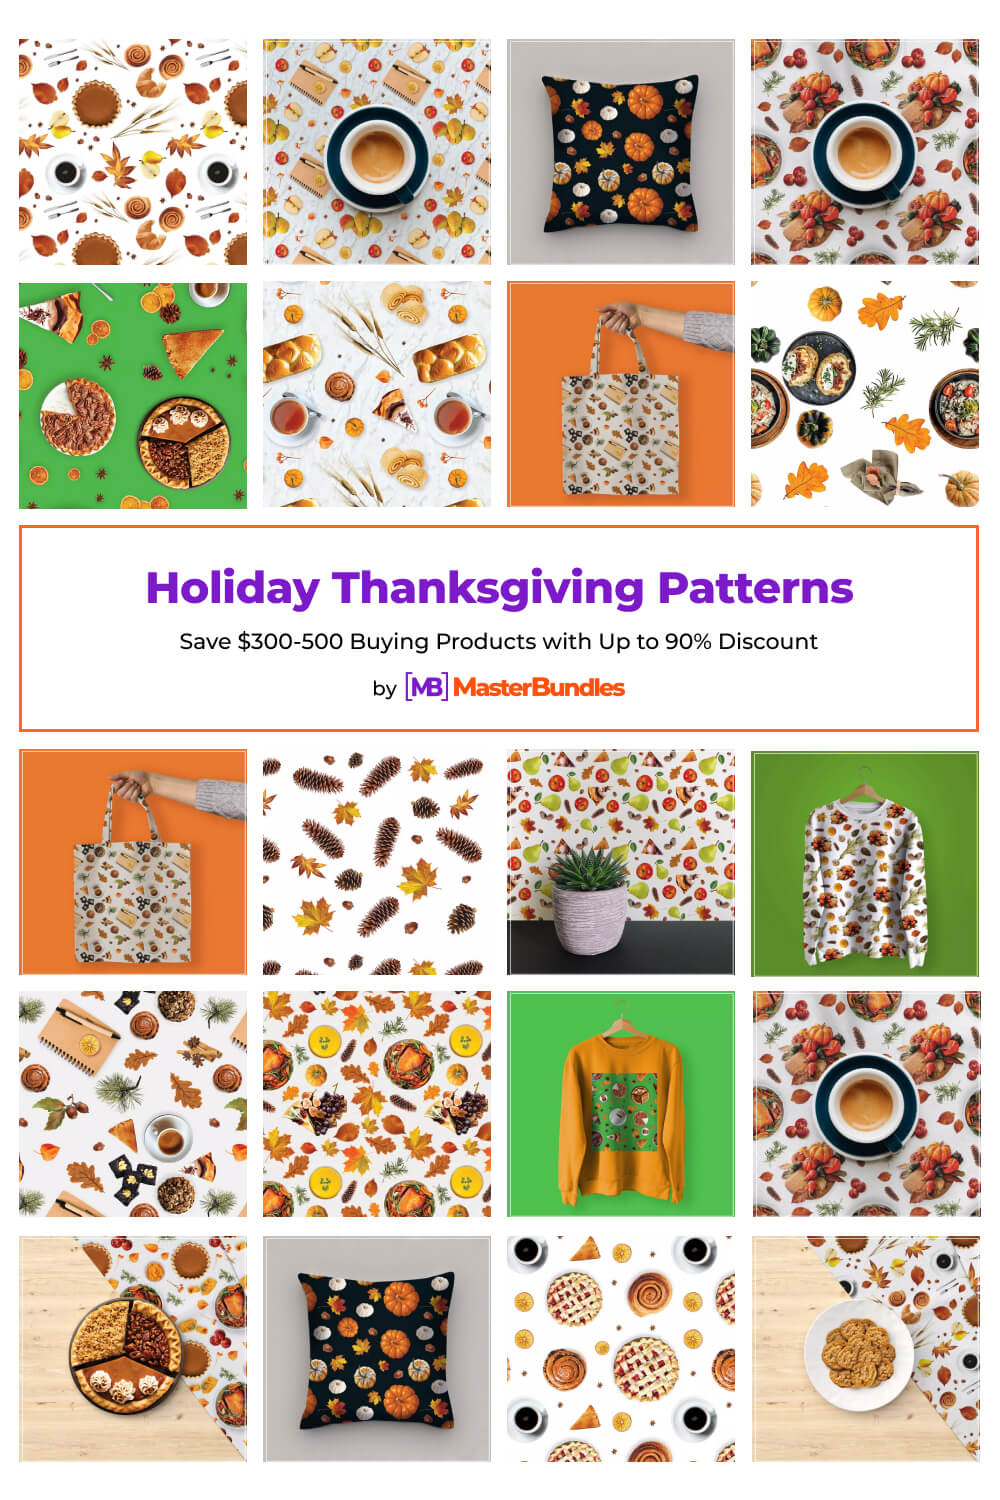 holiday thanksgiving patterns pinterest image.